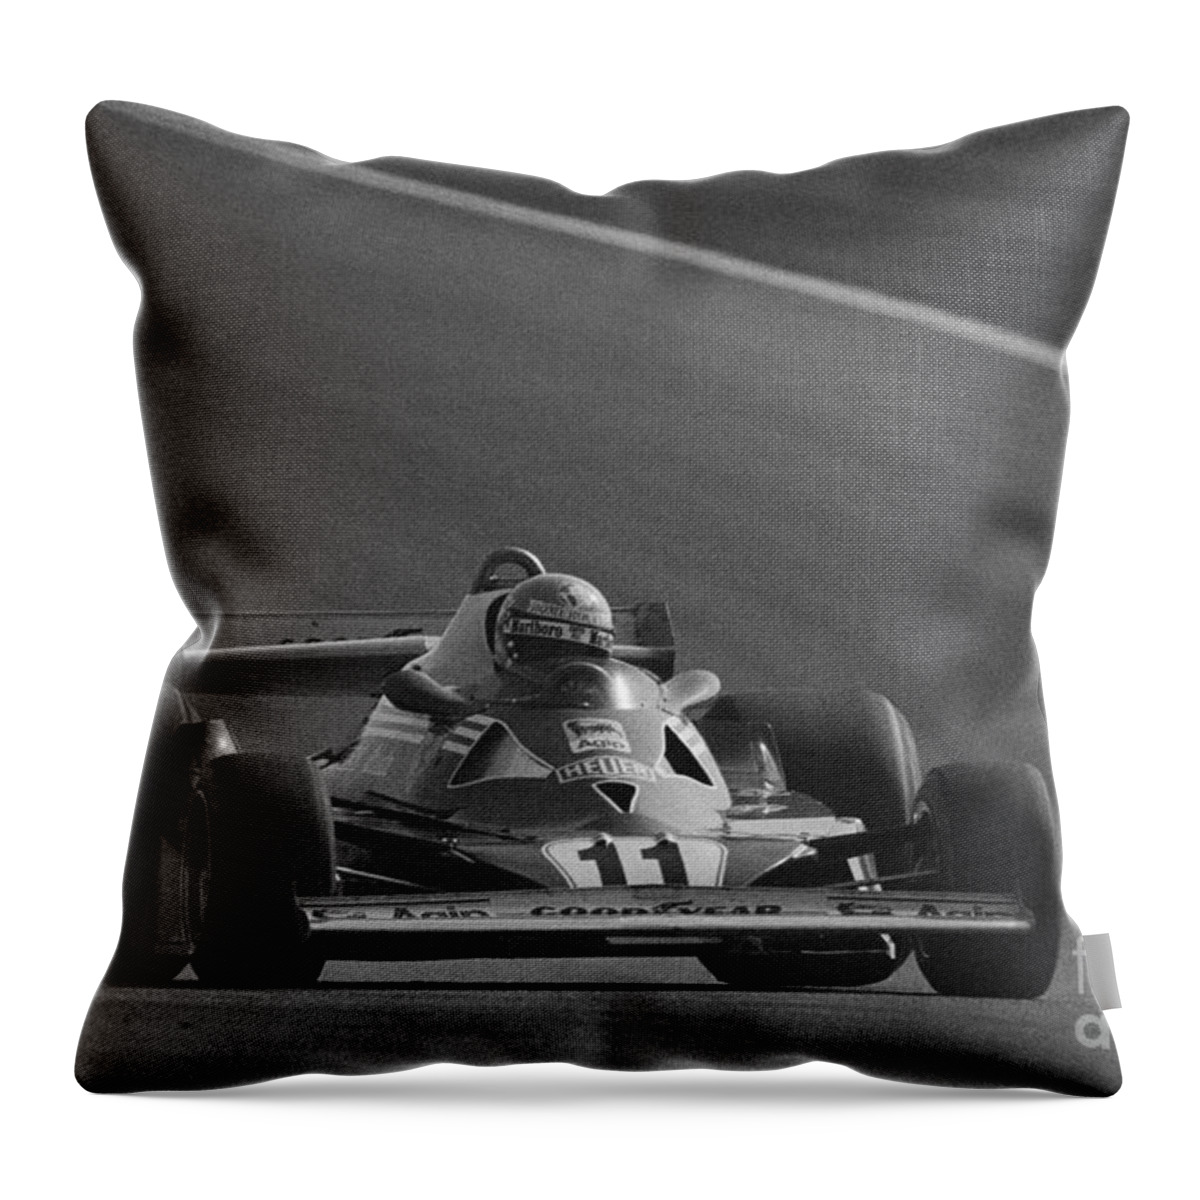 Niki Lauda Throw Pillow featuring the photograph Niki Lauda. 1977 French Grand Prix by Oleg Konin